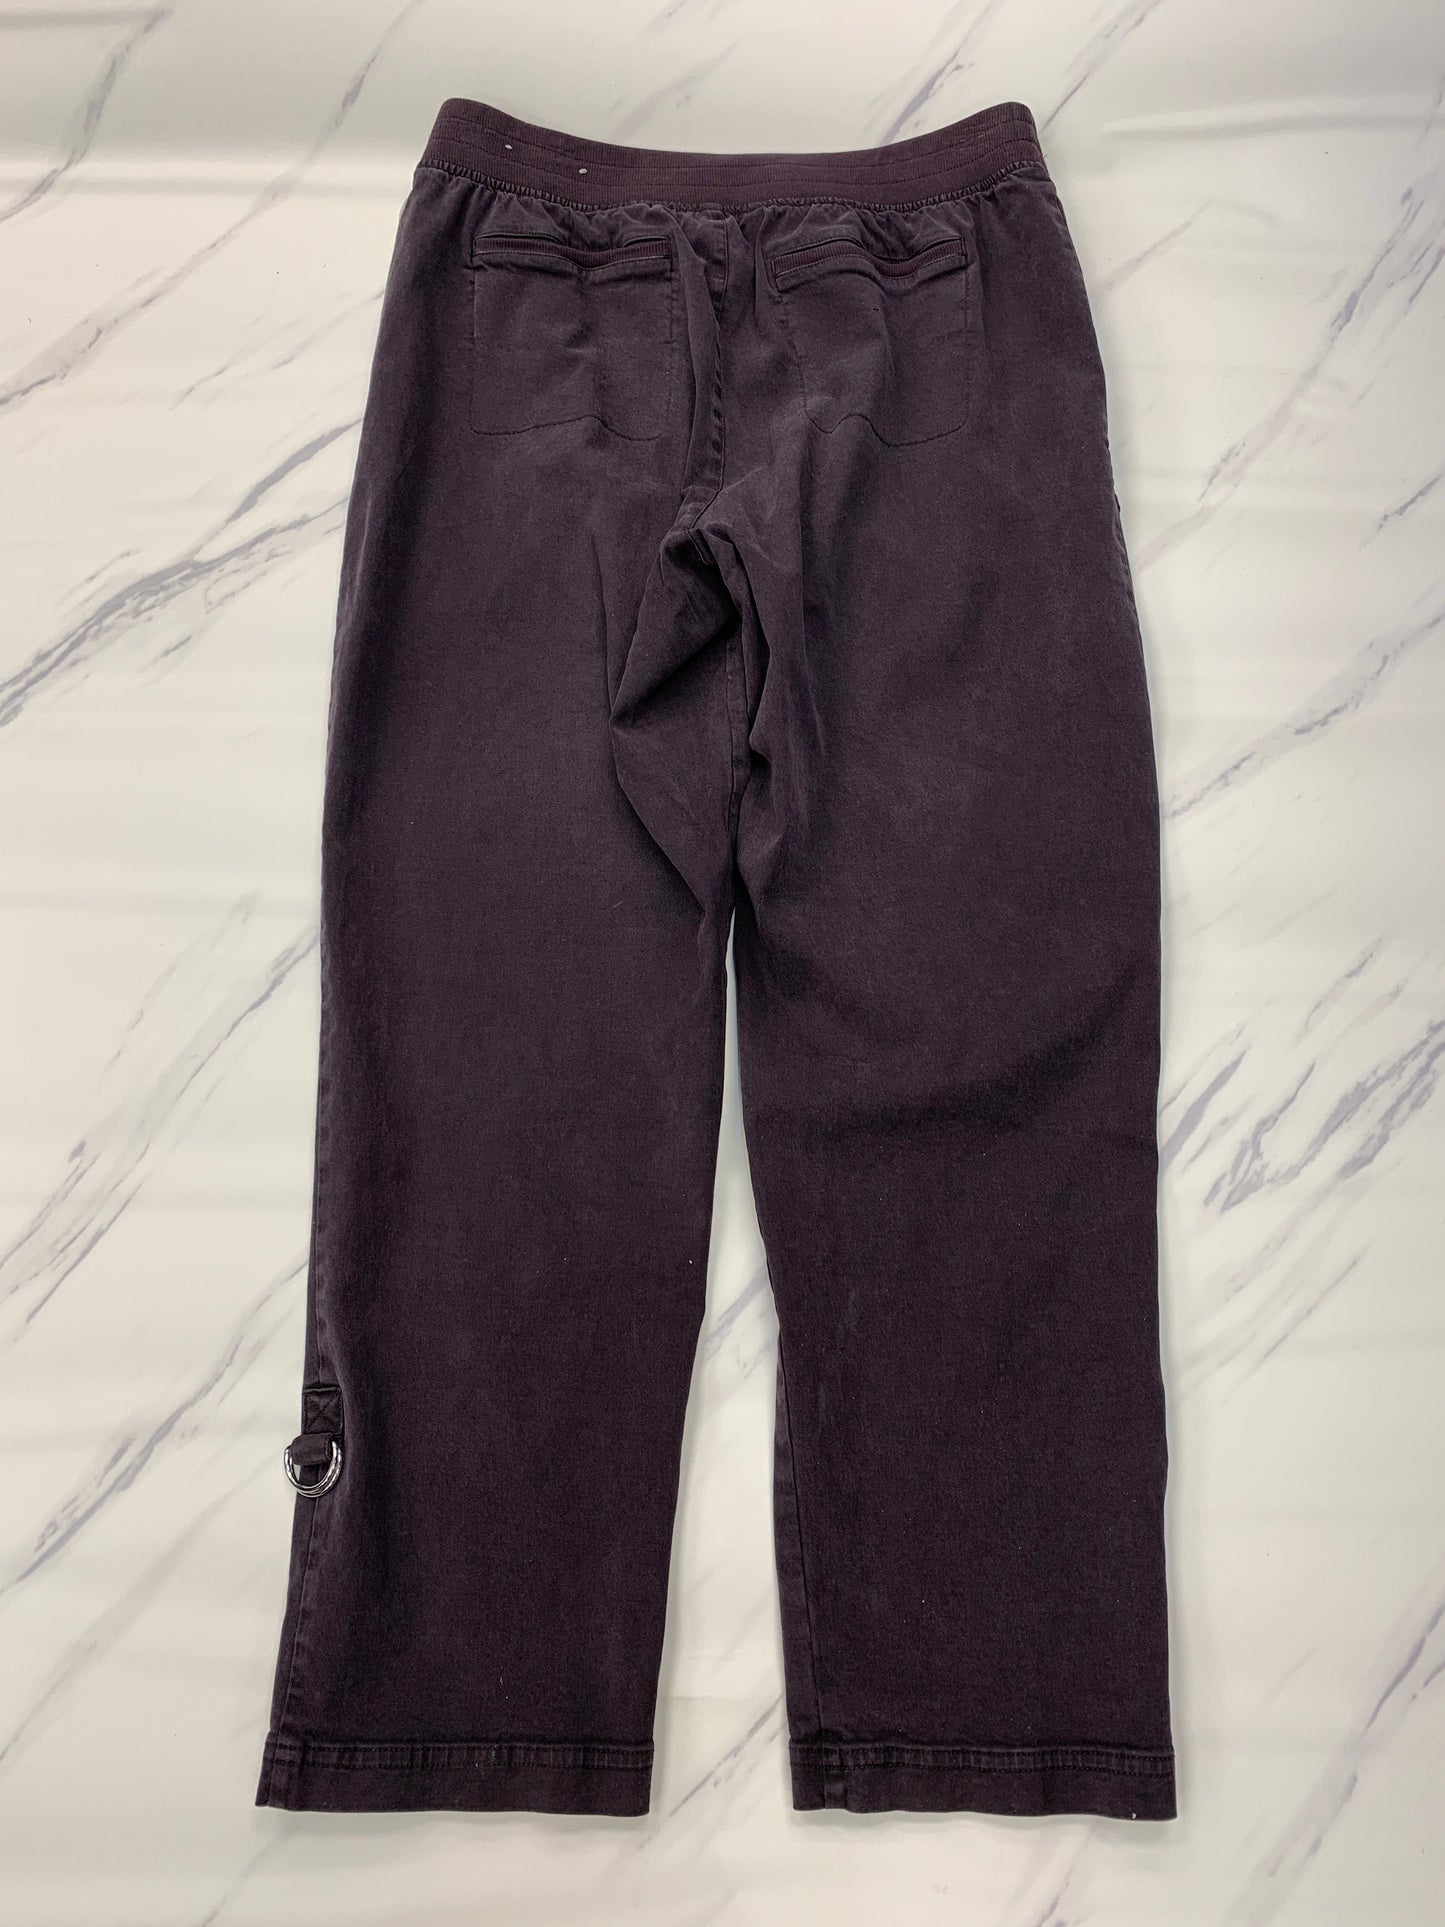 Pants Chinos & Khakis By Soft Surroundings  Size: Petite  M